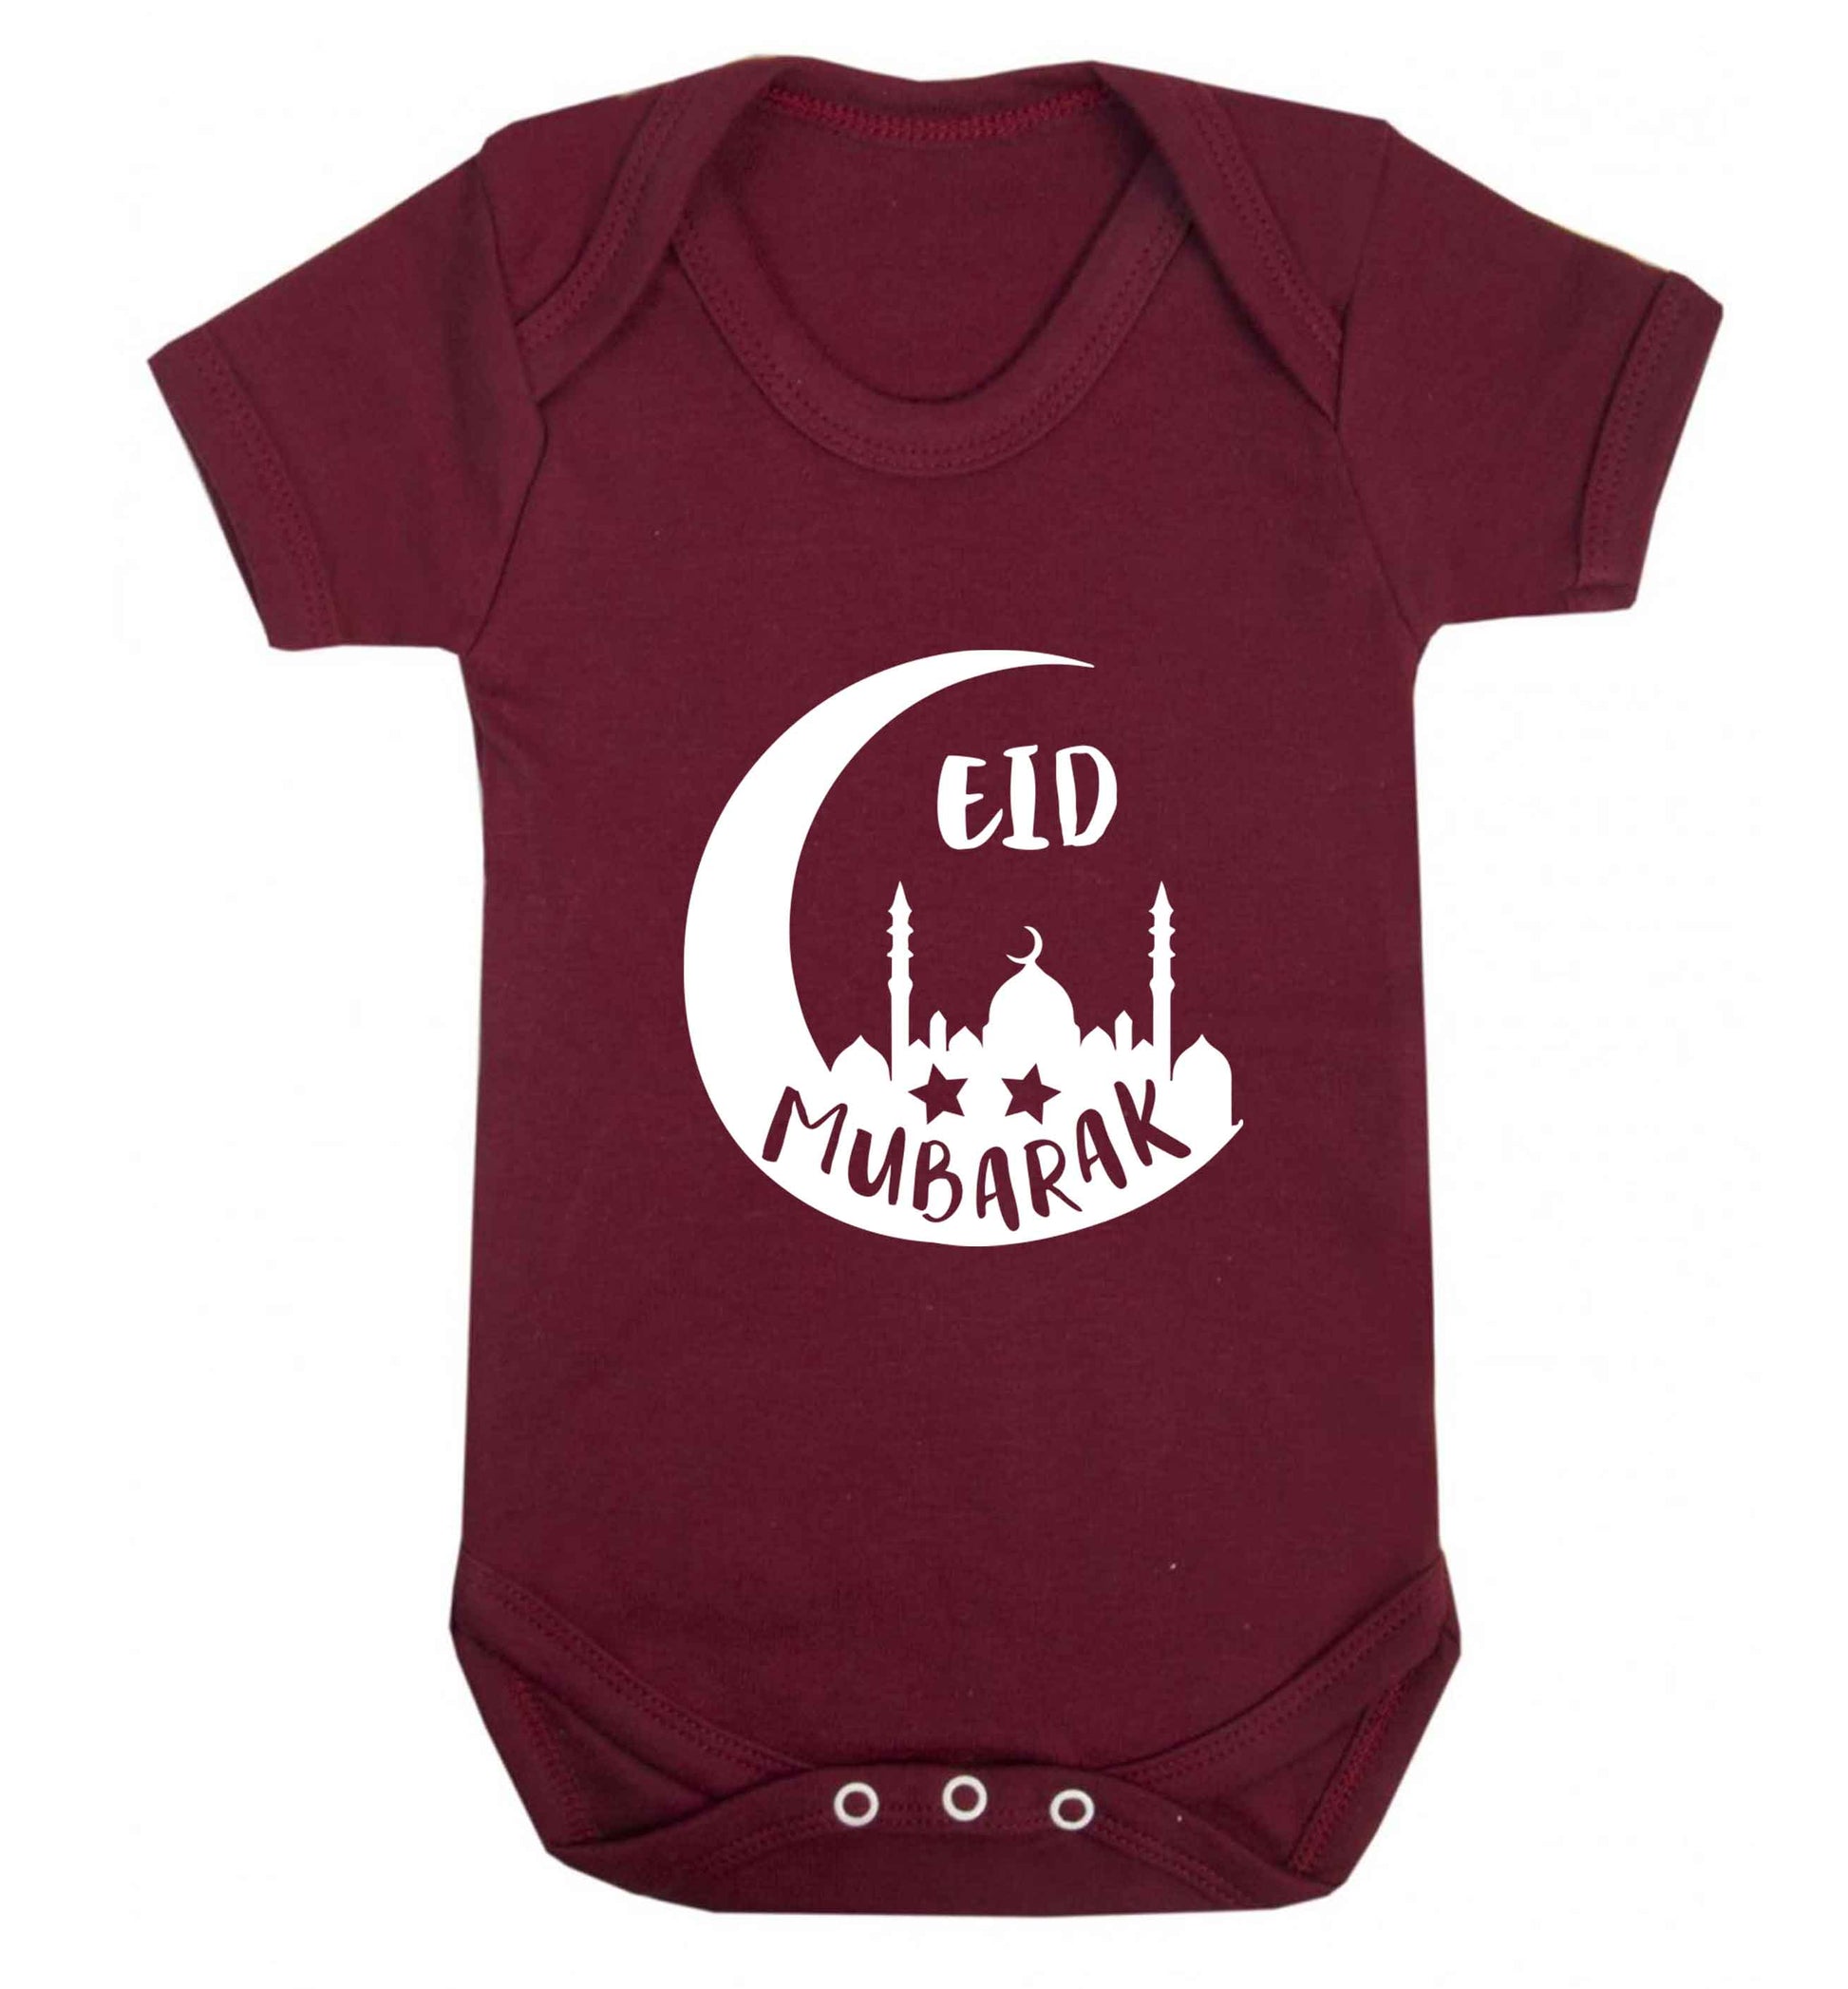 Eid mubarak baby vest maroon 18-24 months